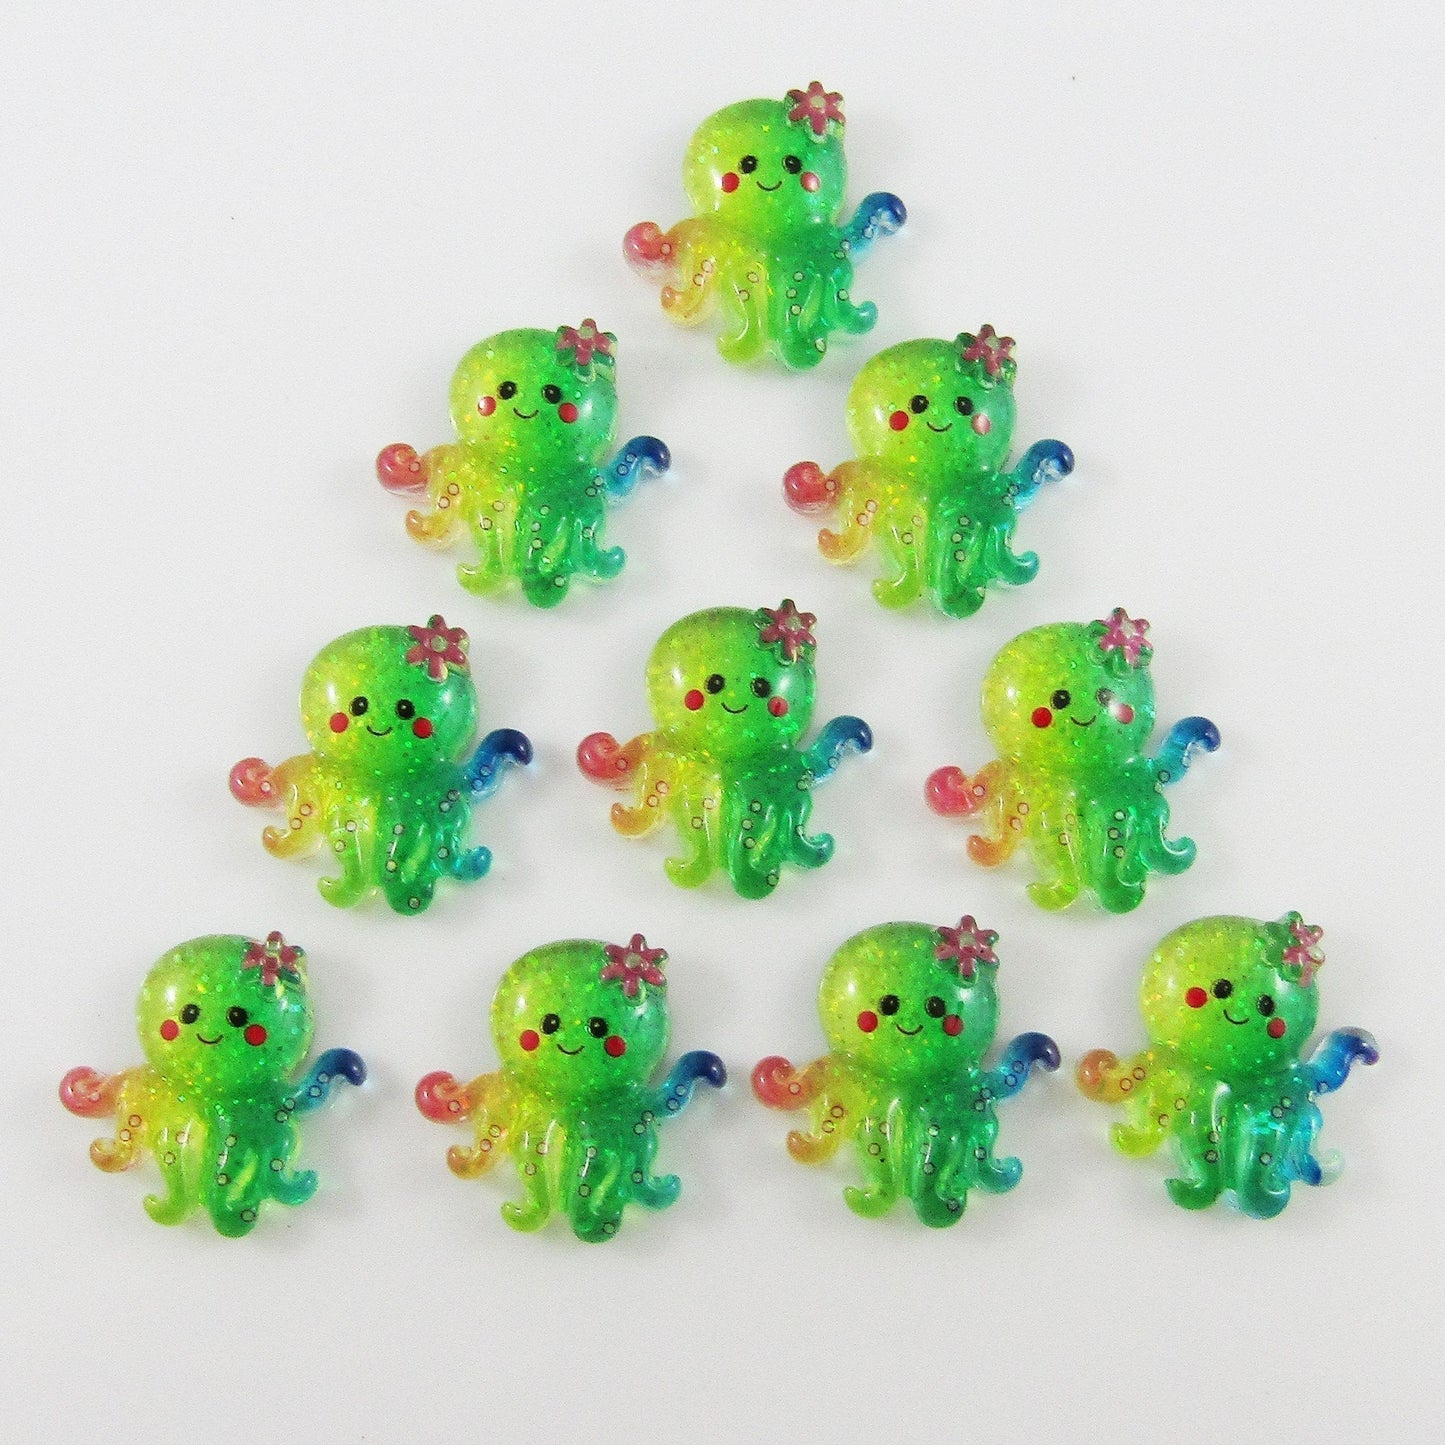 10pcs DIY Resin Glitter Rainbow Octopus Cabochon FB Hair Clips Scrapbooking etc